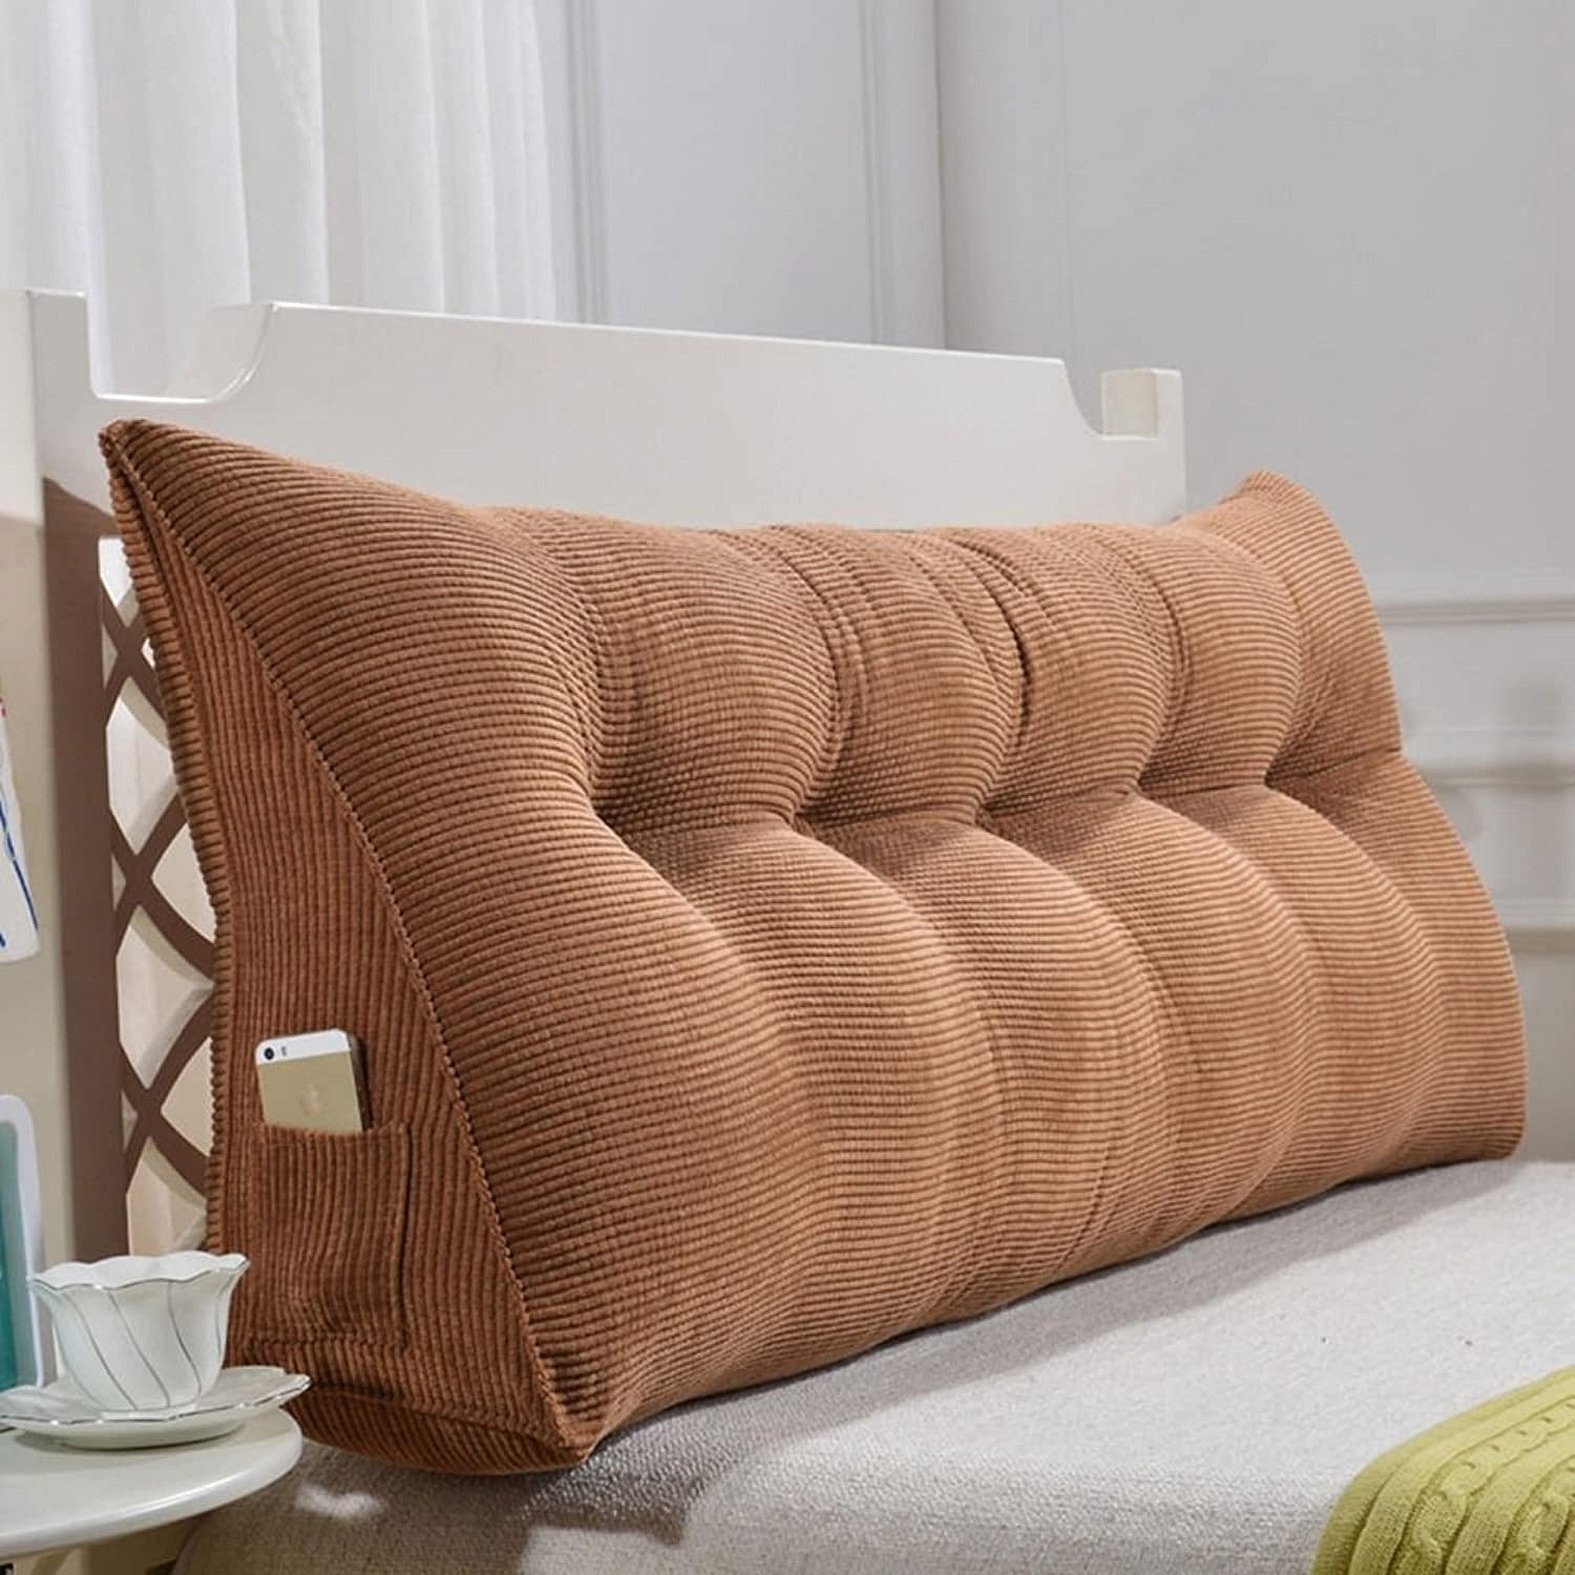 Купить подушку прямоугольную. Подушка Bed Wedge. Подушка для дивана. Подушки для дивана большие. Подушки для спинки дивана.